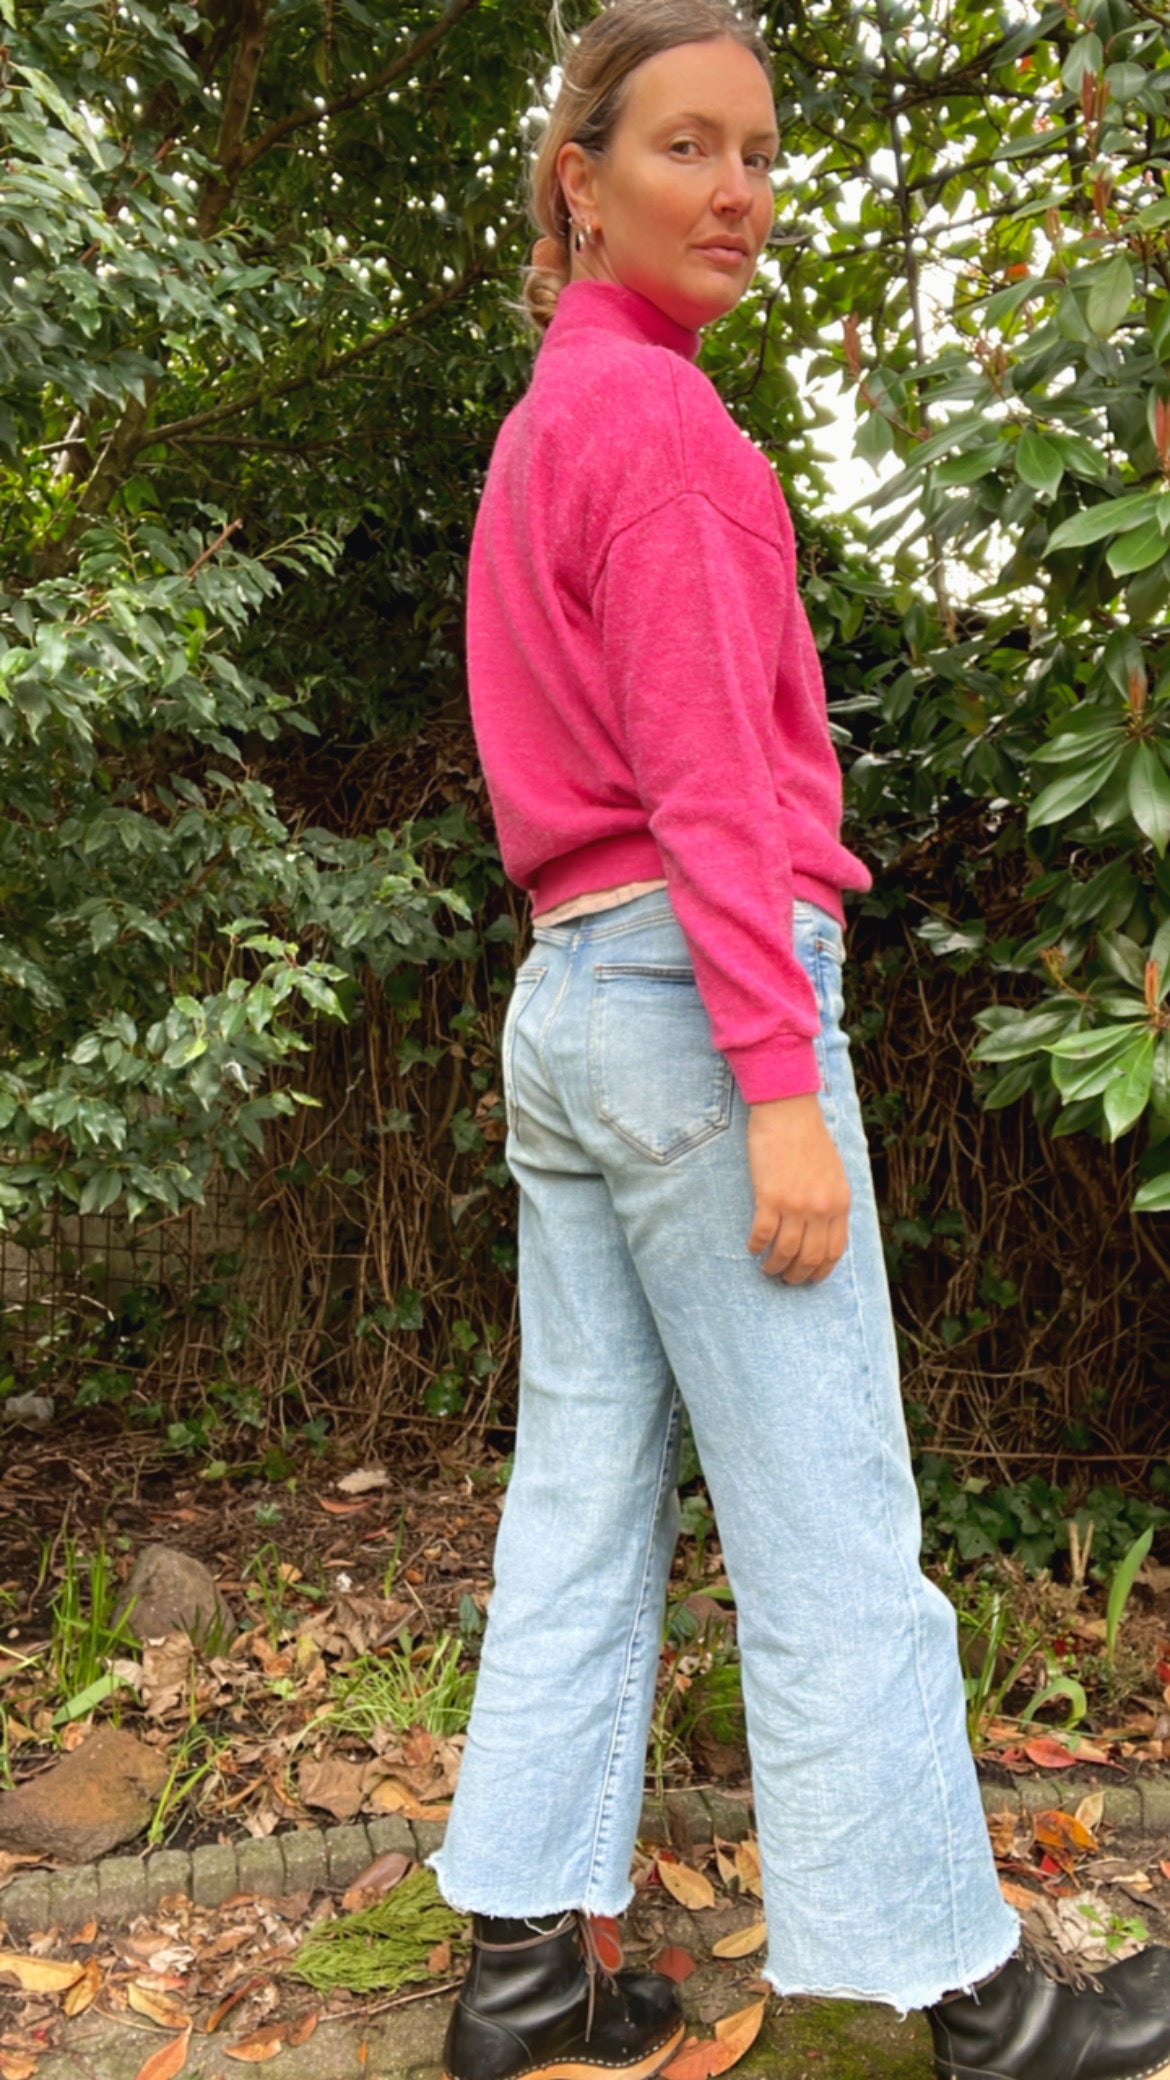 Hot pink jumper